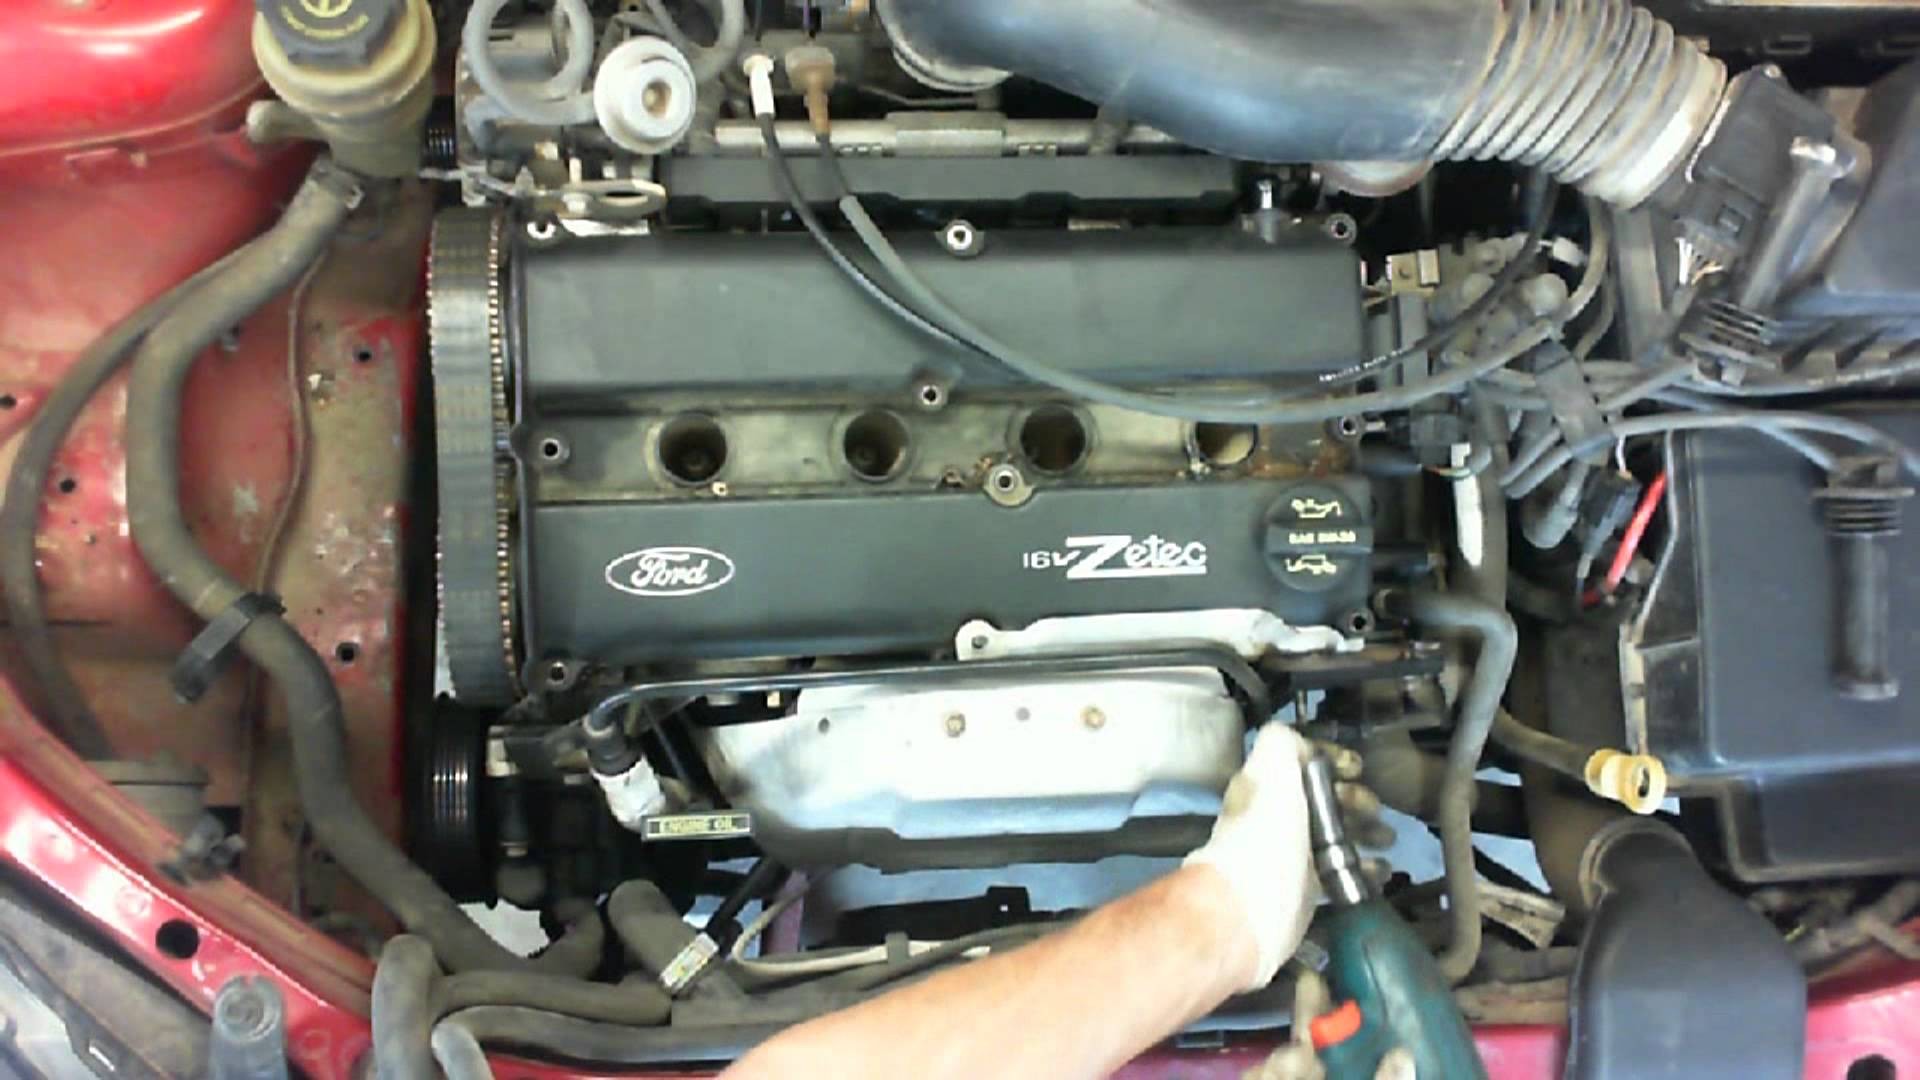 Ford Focus Zetec Engine Diagram ford Zetec 2 0 Liter Timing Belt Replacement Part I Hd